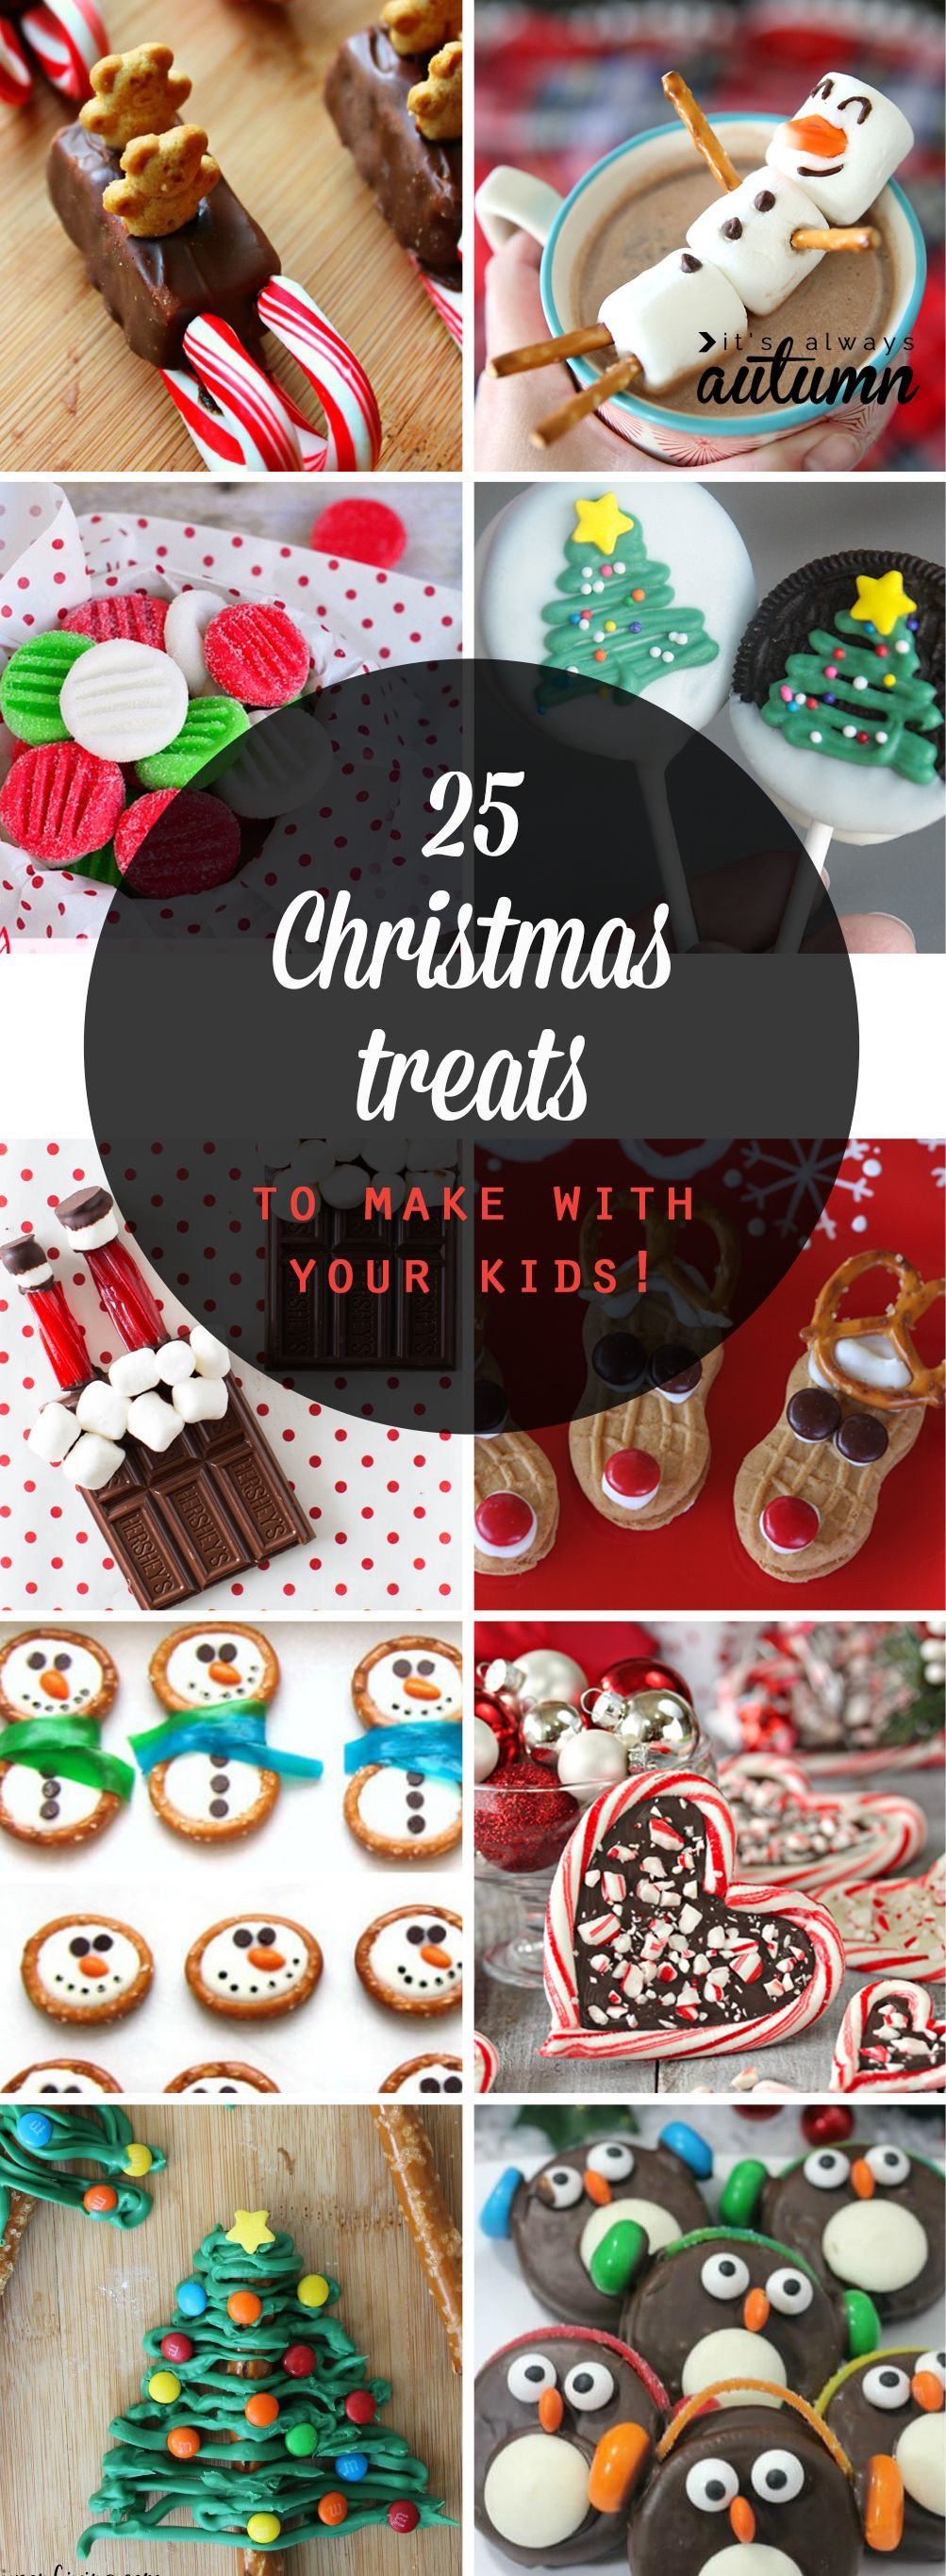 Easy Christmas Cookies To Make With Kids
 25 adorable Christmas treats to make with your kids